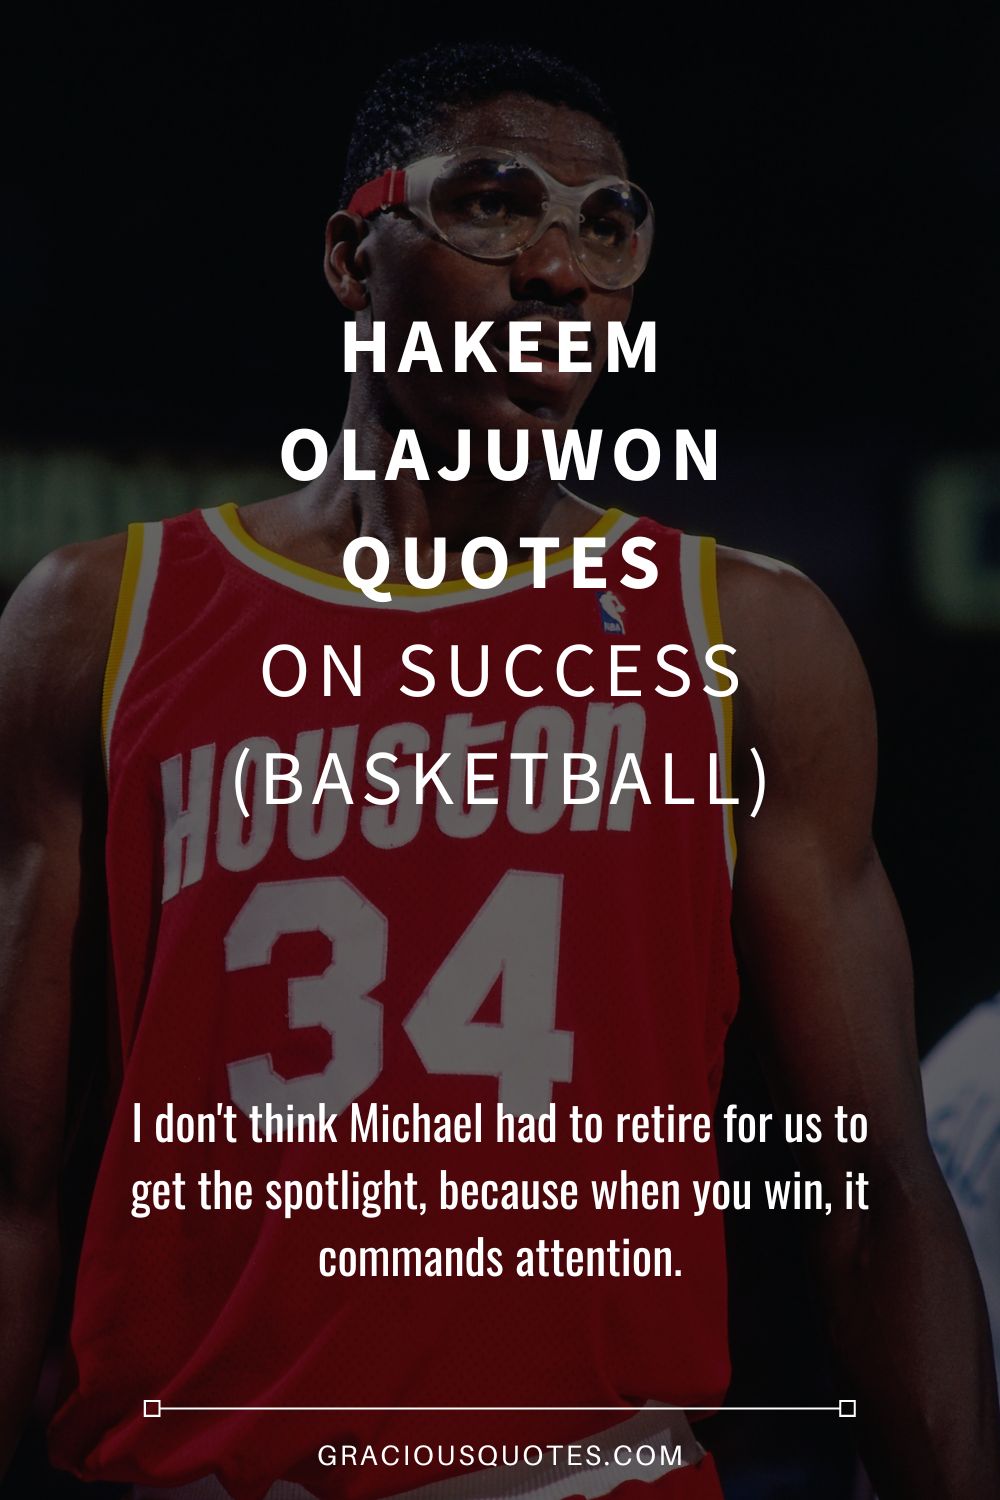 Hakeem Olajuwon Quotes on Success (BASKETBALL) - Gracious Quotes